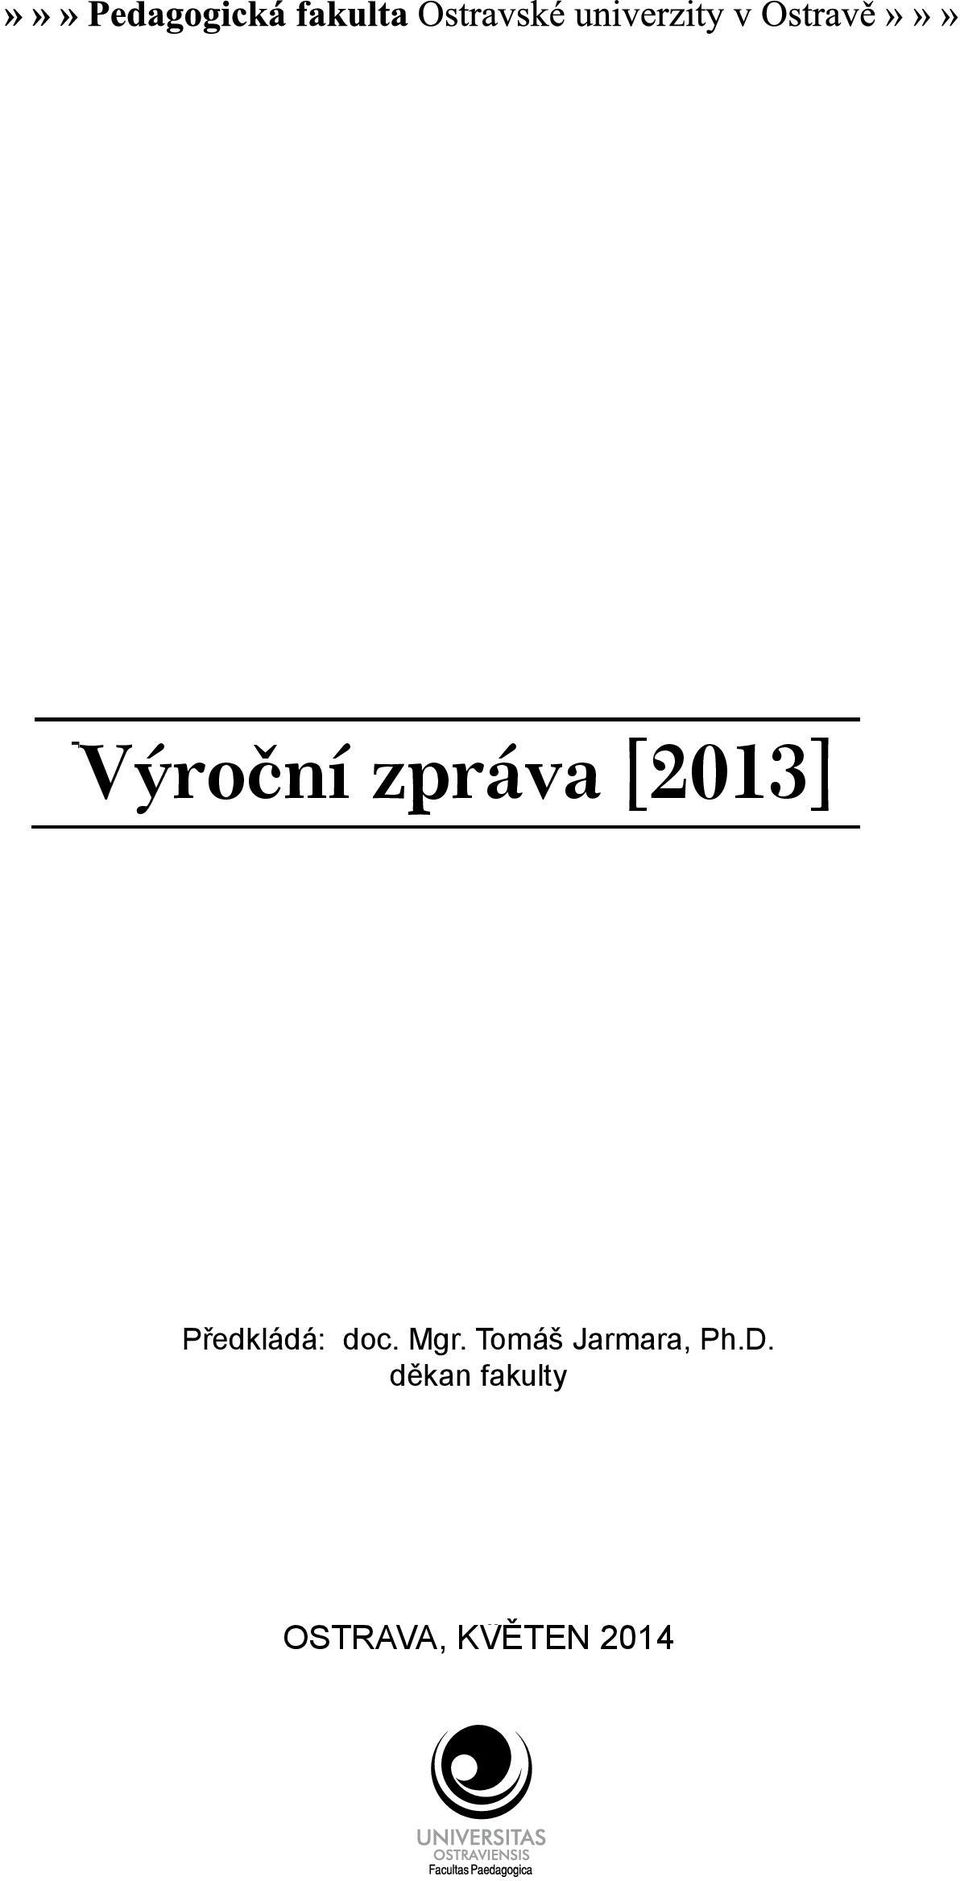 Tomáš Jarmara, Ph.D.